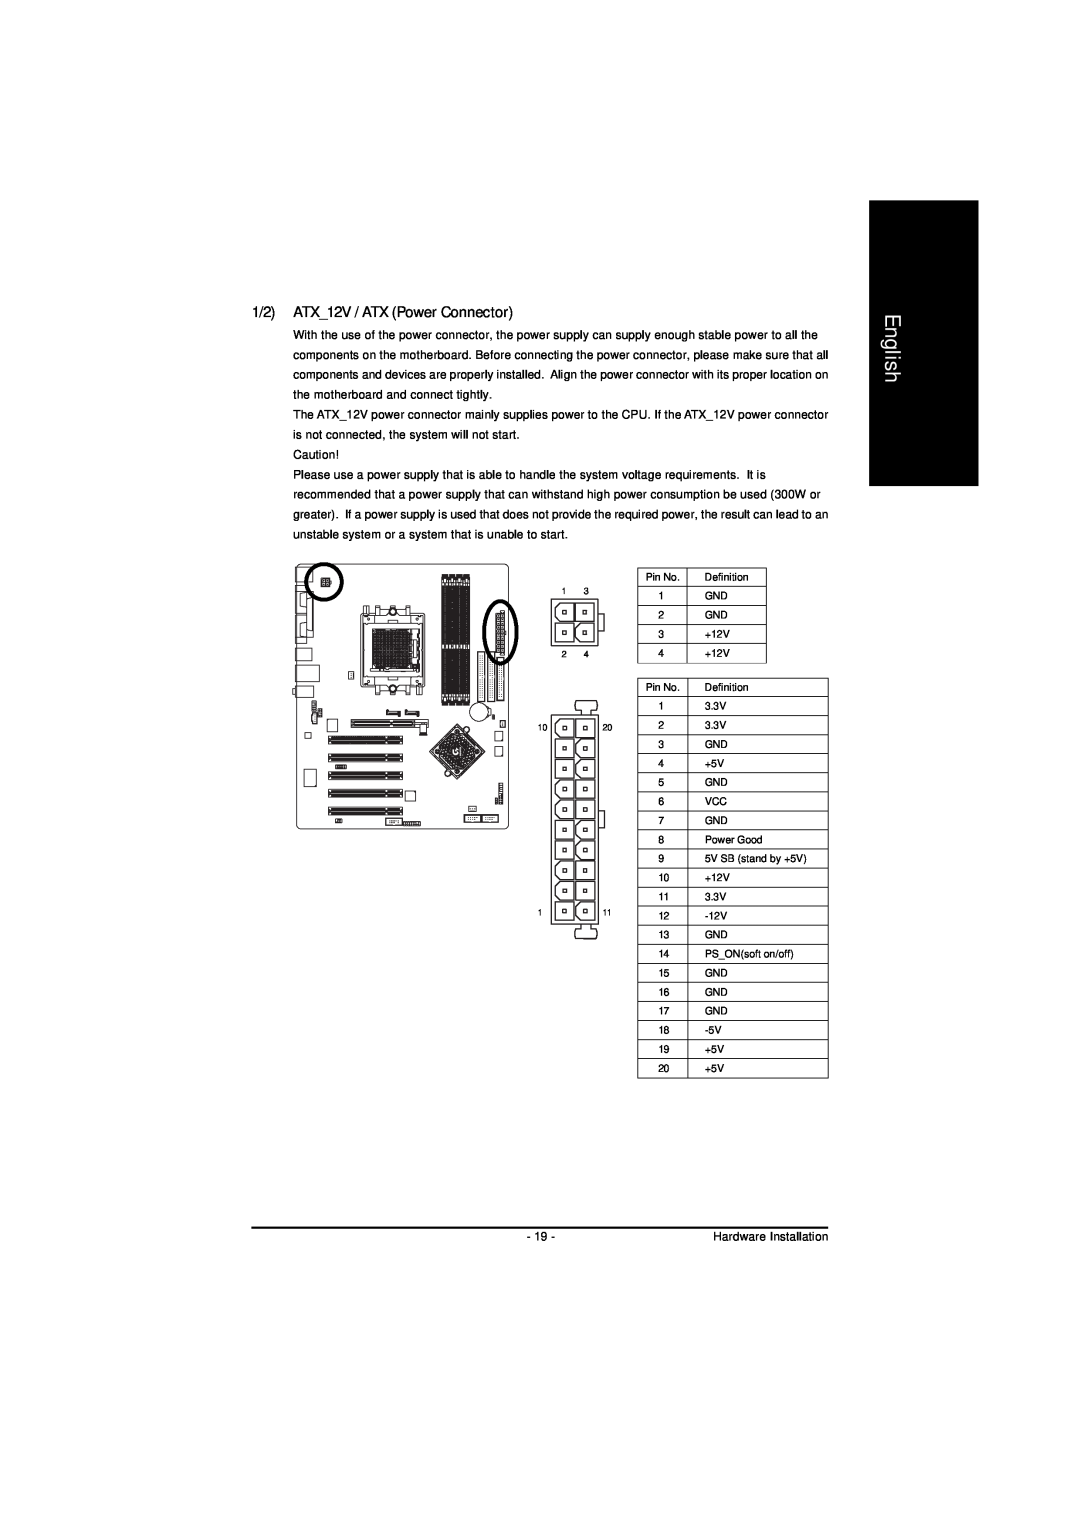 AMD GA-K8NS-939, GA-K8NS PRO-939 user manual 1/2 ATX12V / ATX Power Connector, English 